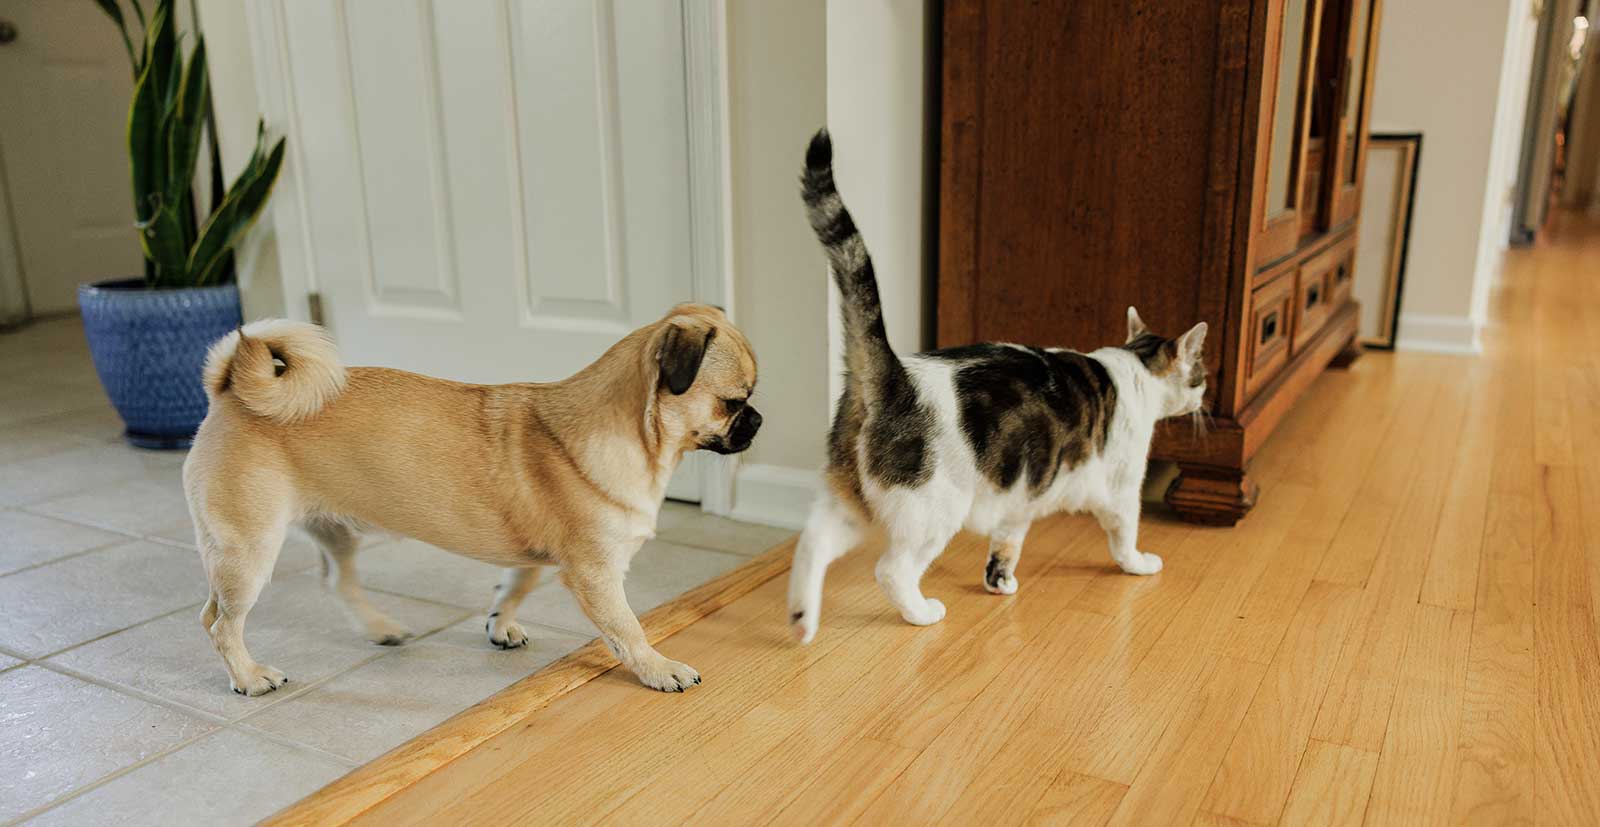 A dog following a cat indoors